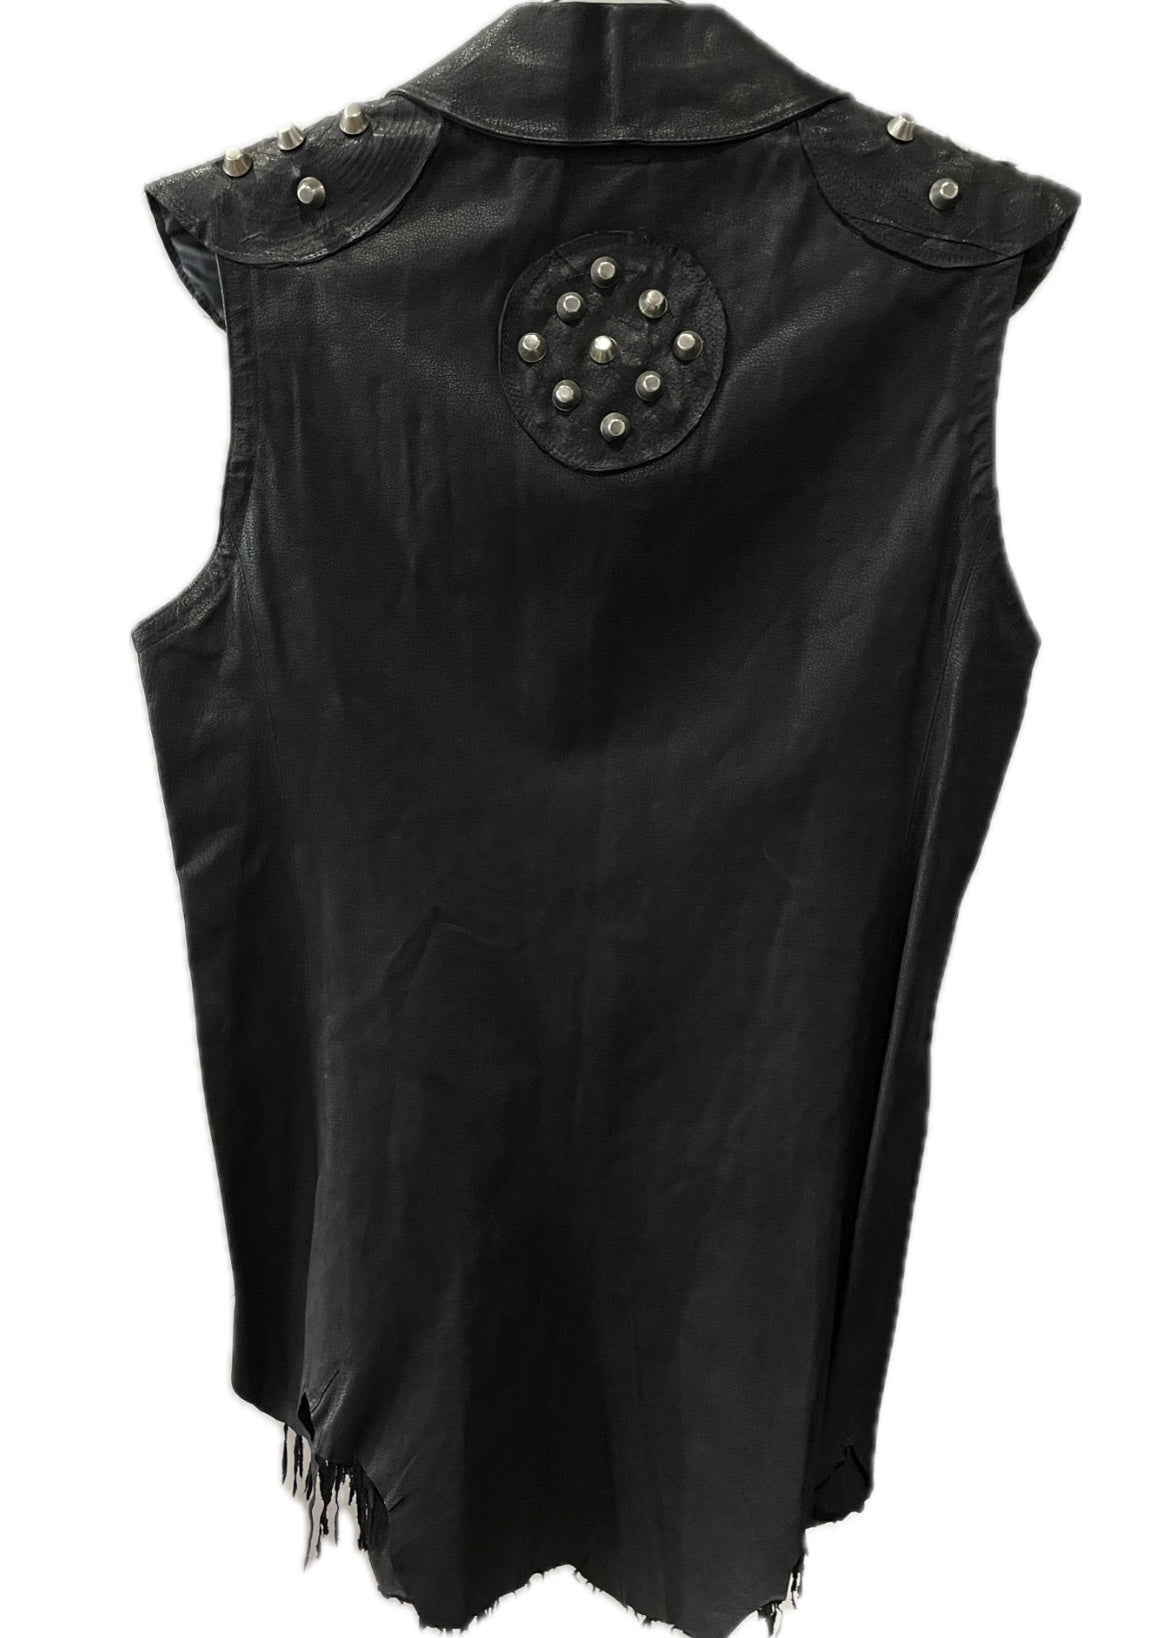 Black Raw Leather Vest